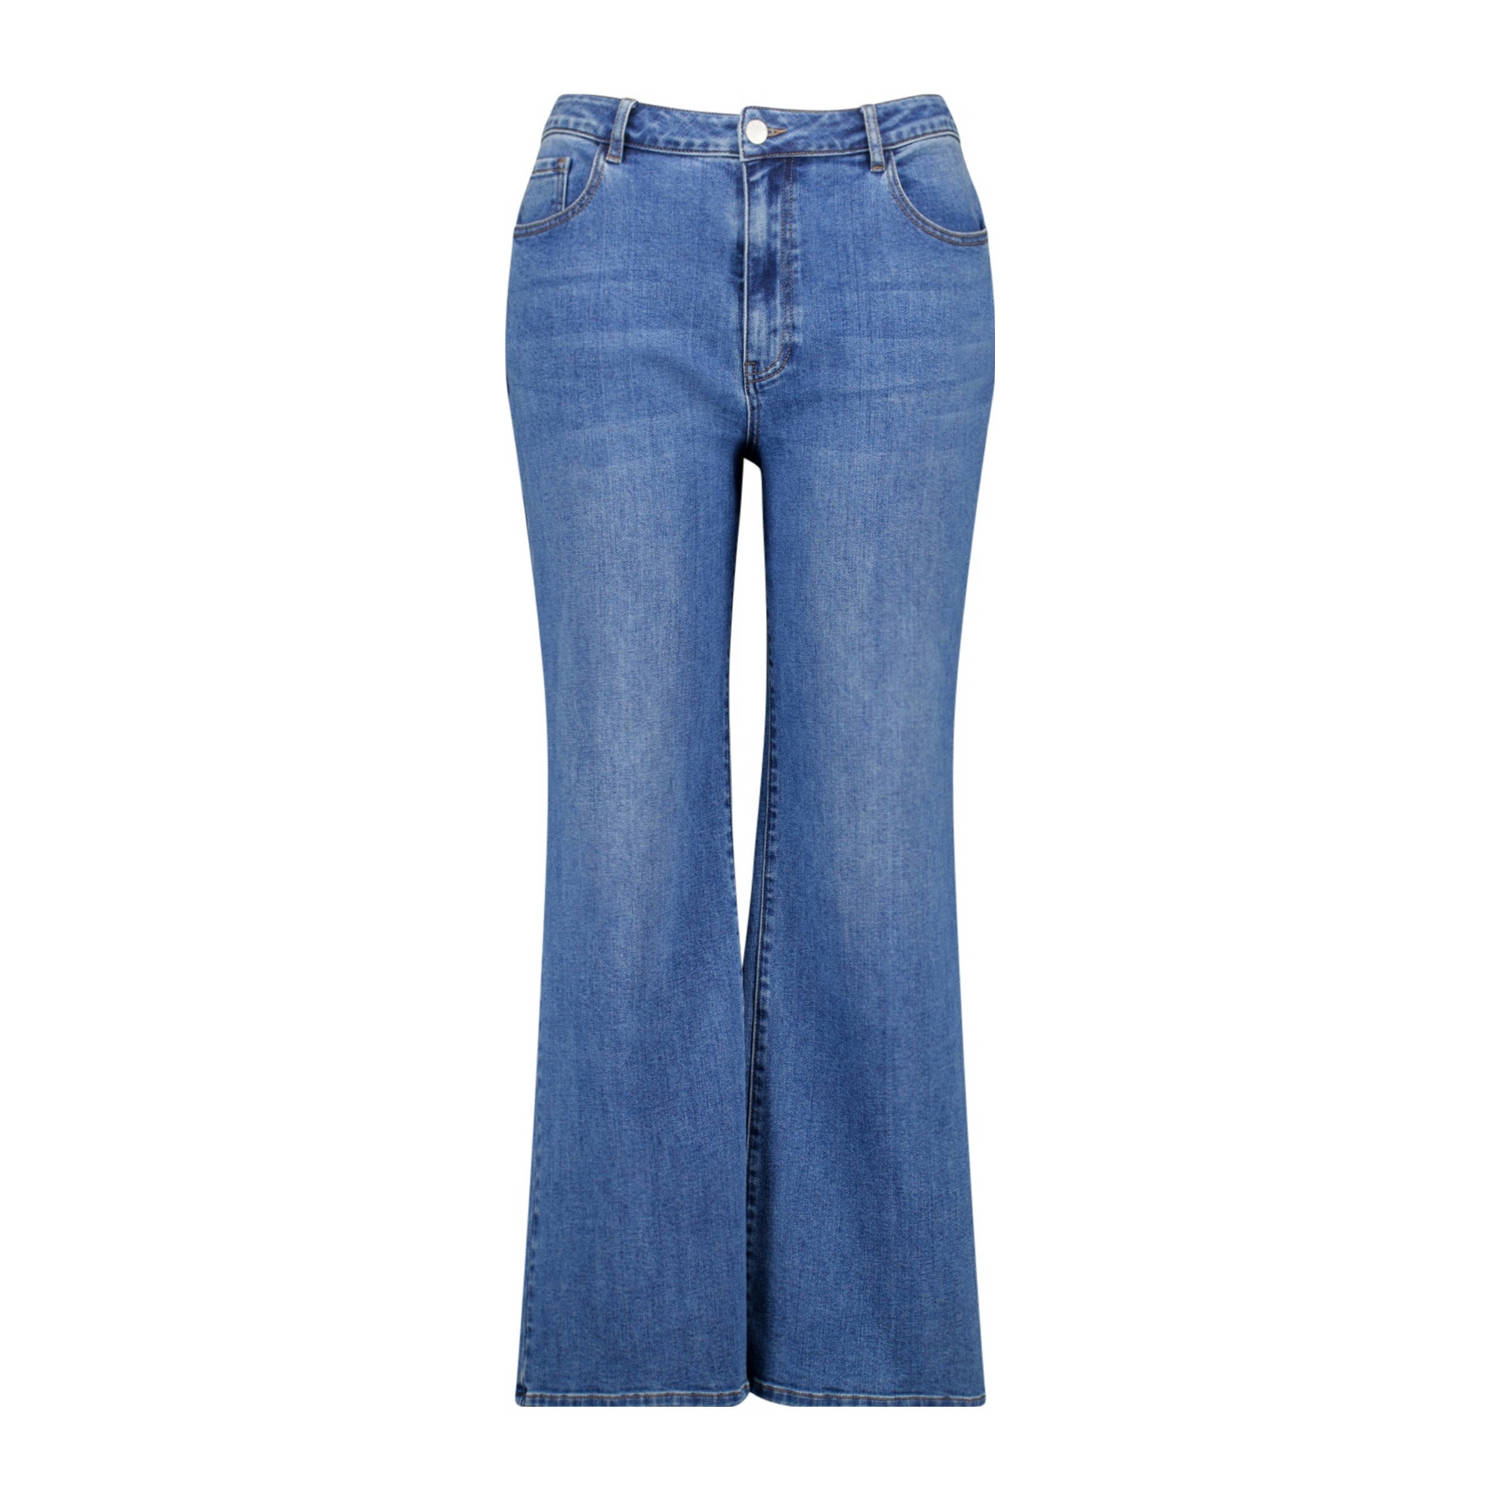 MS Mode jeans light blue denim